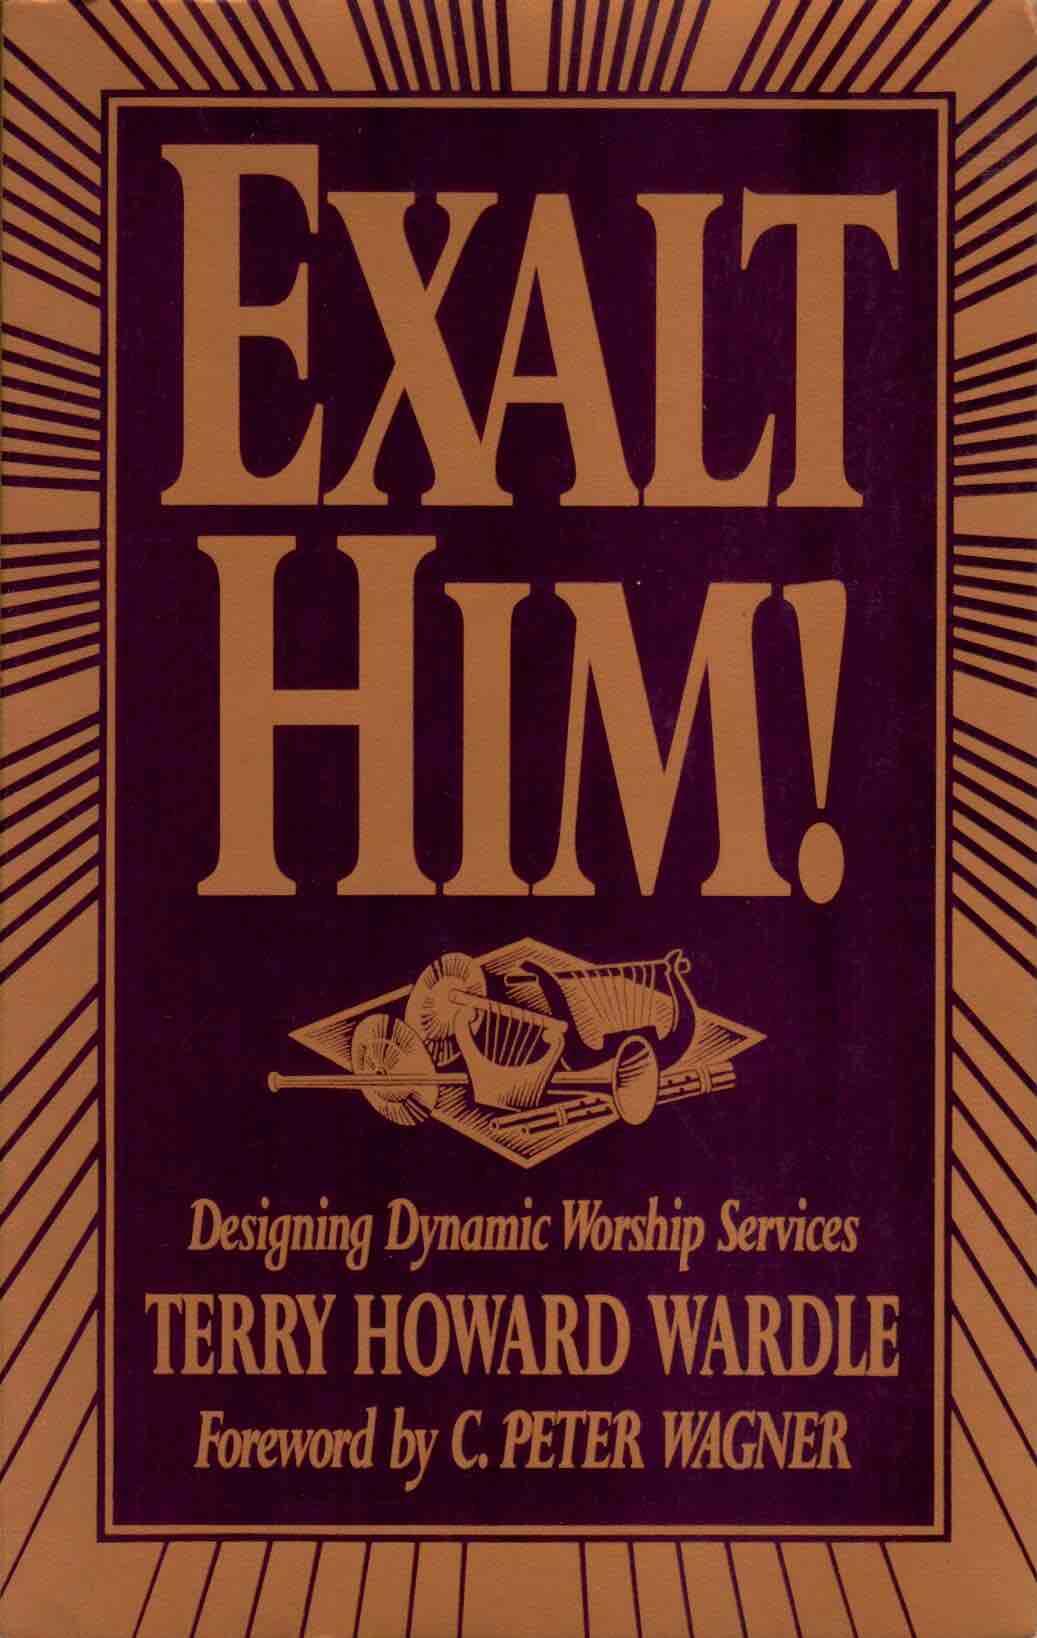 Cover of Exalt Him!